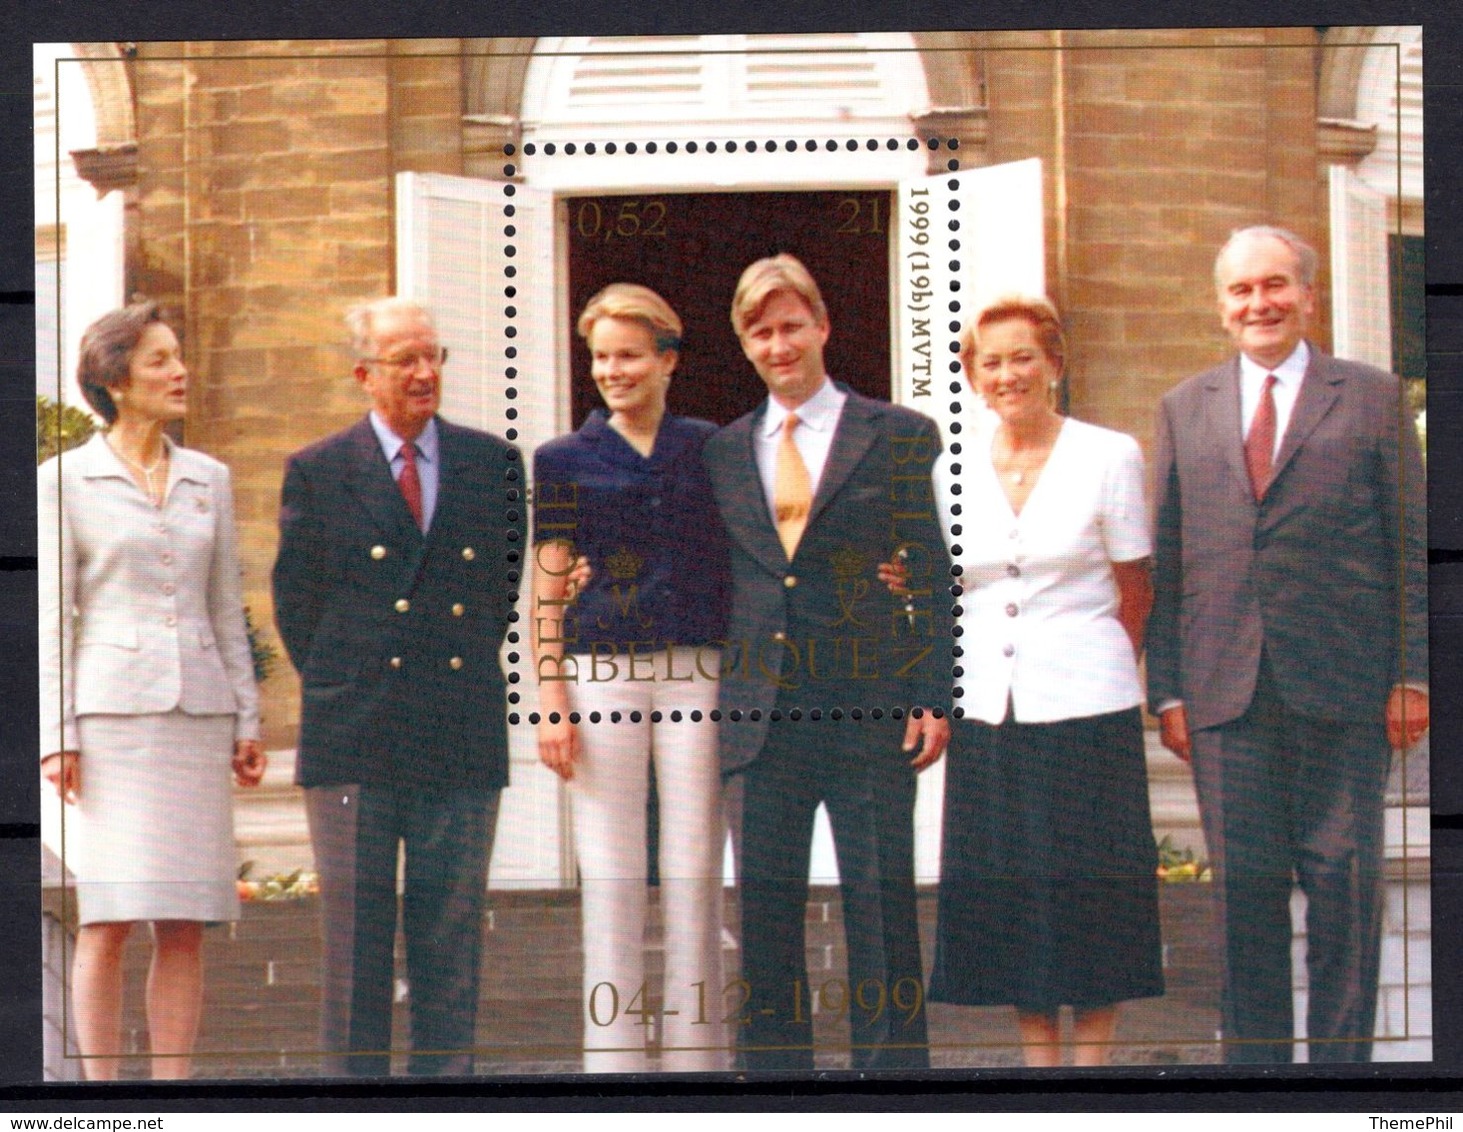 Belgium België Belgique 1999 R MNH Block Royalty Royal Koningshuis Queen King Family Albert Paola Filip Philippe Mathild - Royalties, Royals